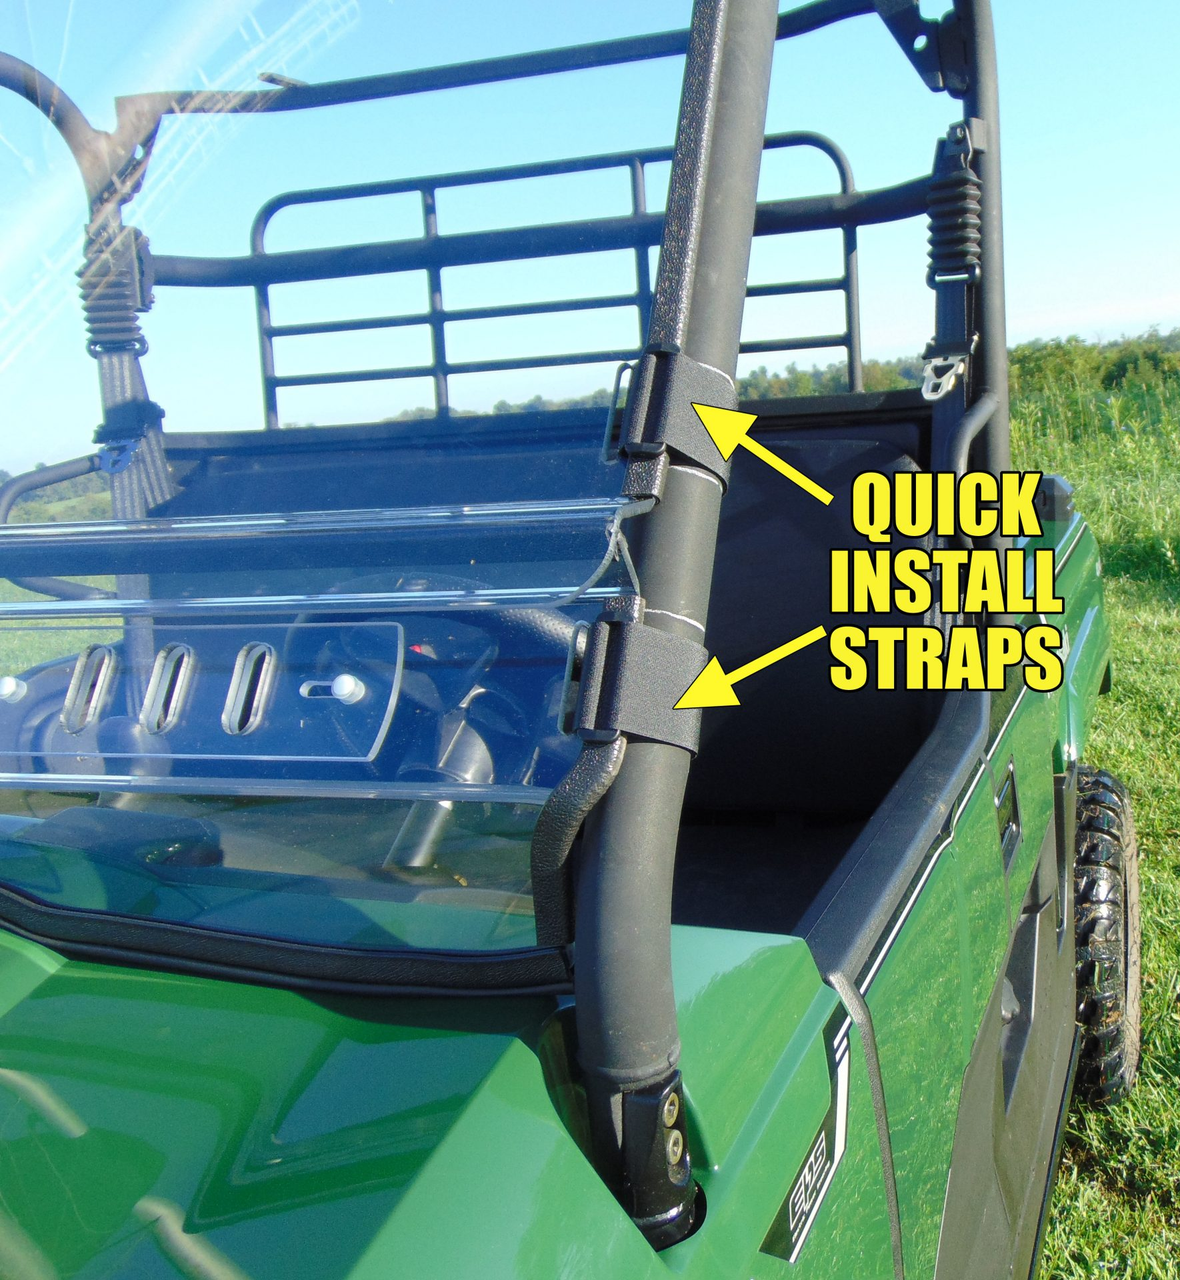 3 Star side x side CF Moto U-Force 500/800 half windshield quick install straps